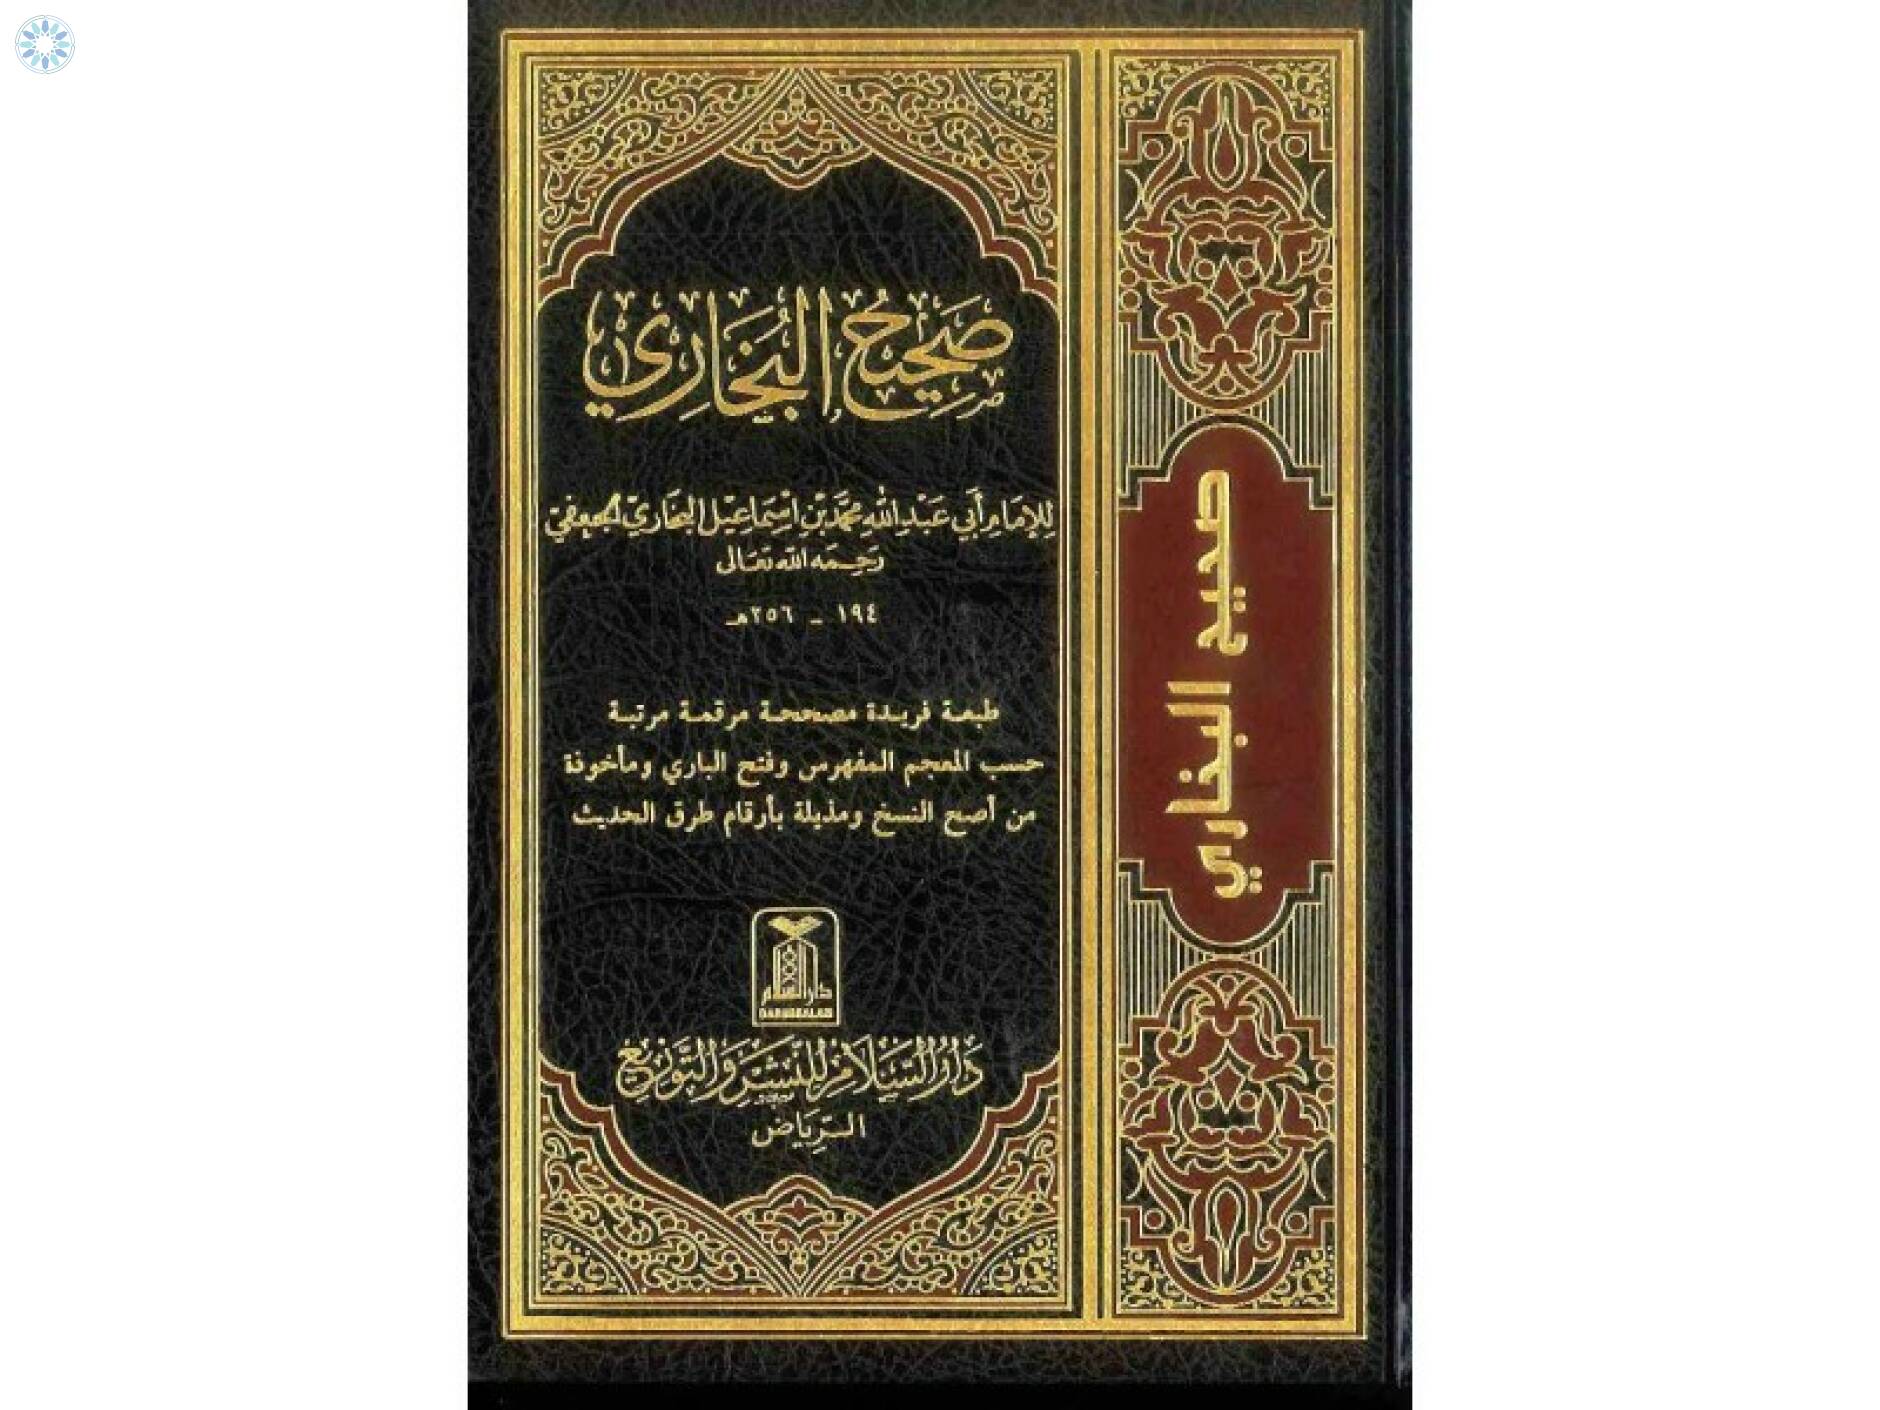 Сахих аль бухари читать. Имам Аль Бухари Сахих. Сборник хадисов Сахих Аль Бухари. Книги имама Аль Бухари.